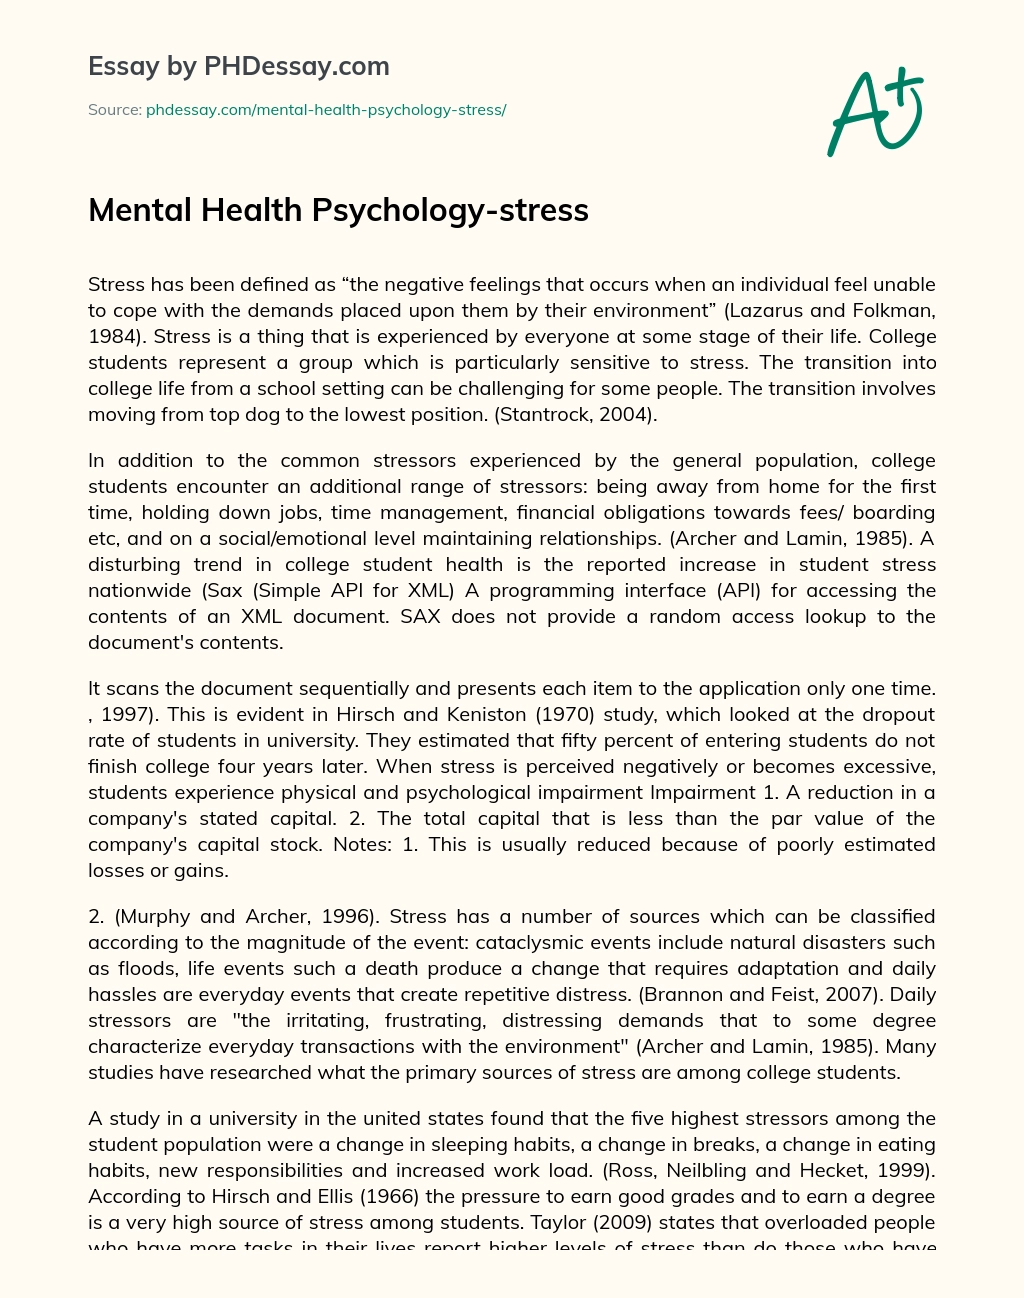 Mental Health Psychology-stress essay